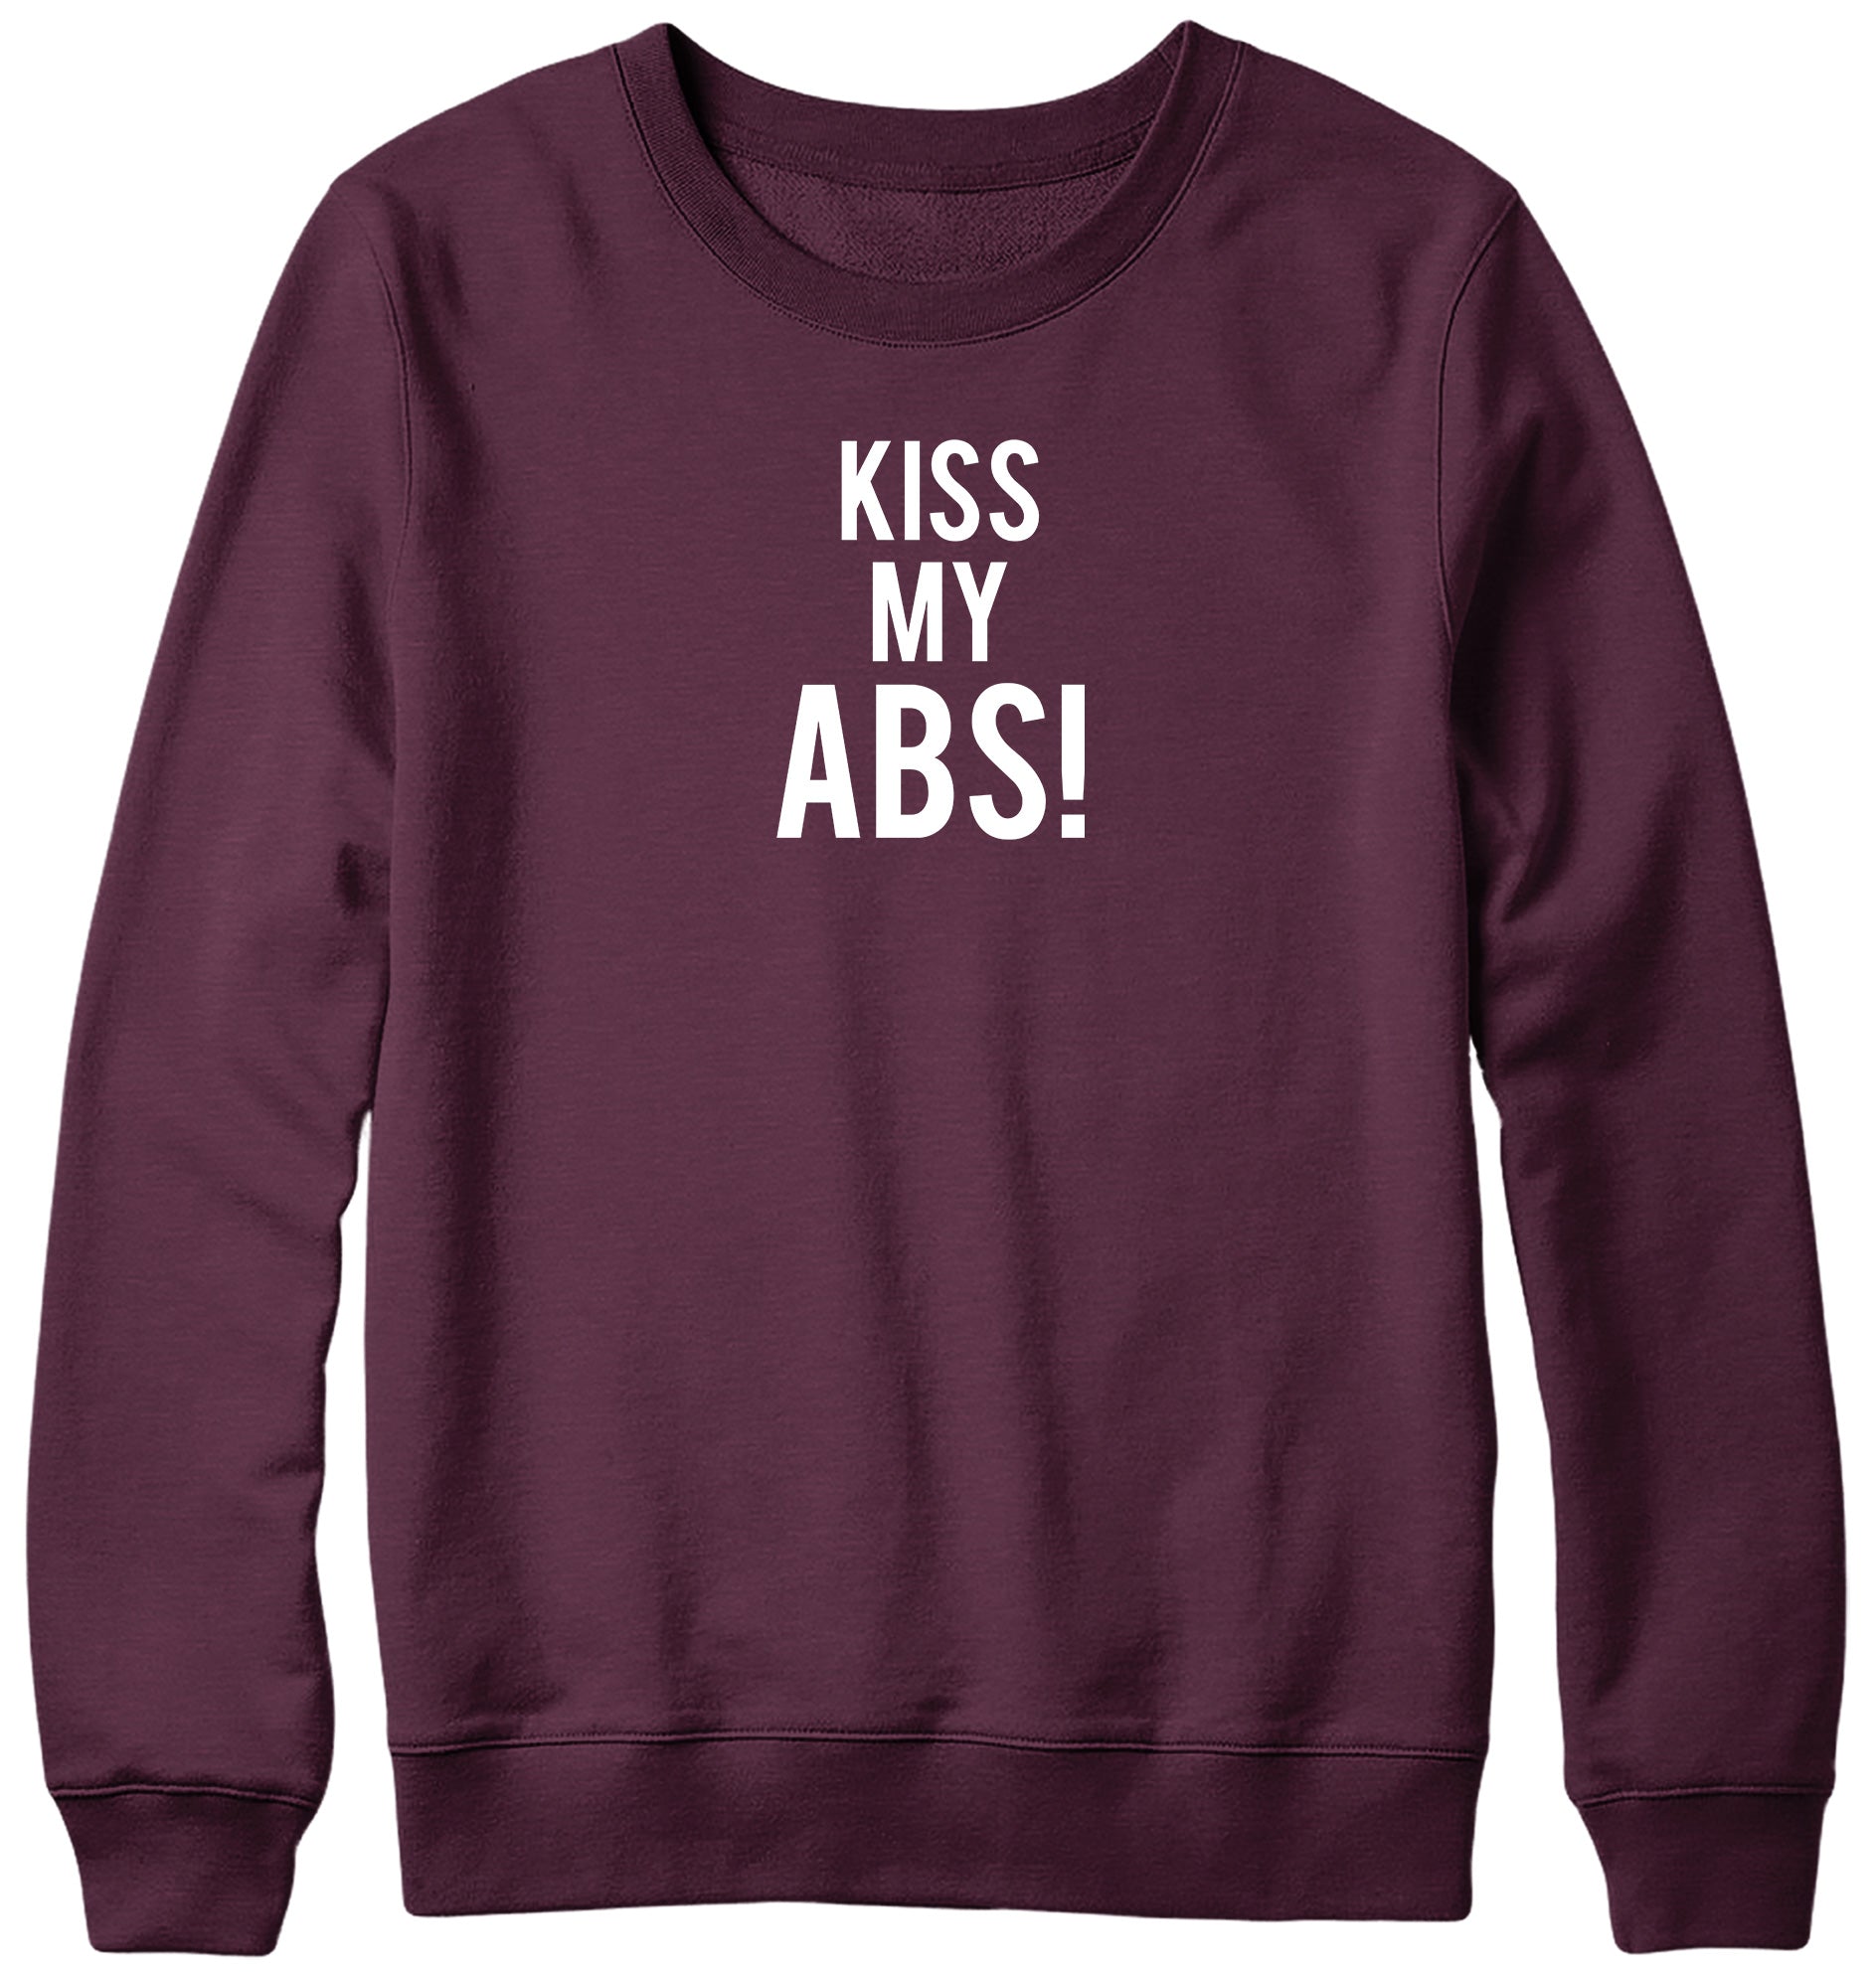 KISS MY ABS! WOMENS LADIES MENS UNISEX SWEATSHIRT